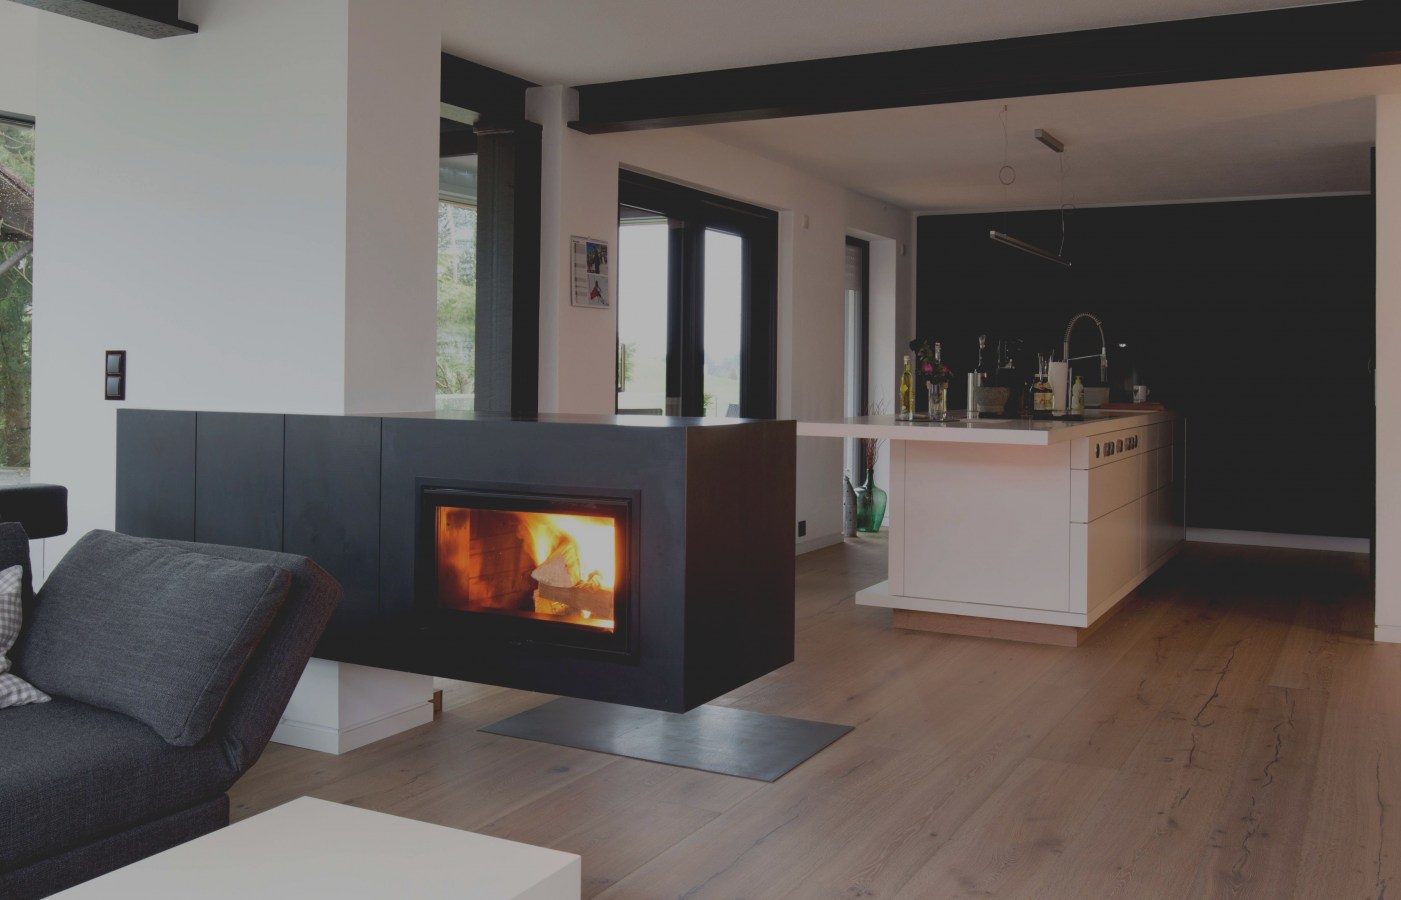 Hmi Fireplace Fresh Zimmer Kamin Sammlung Bioethanol Haus Dekoration